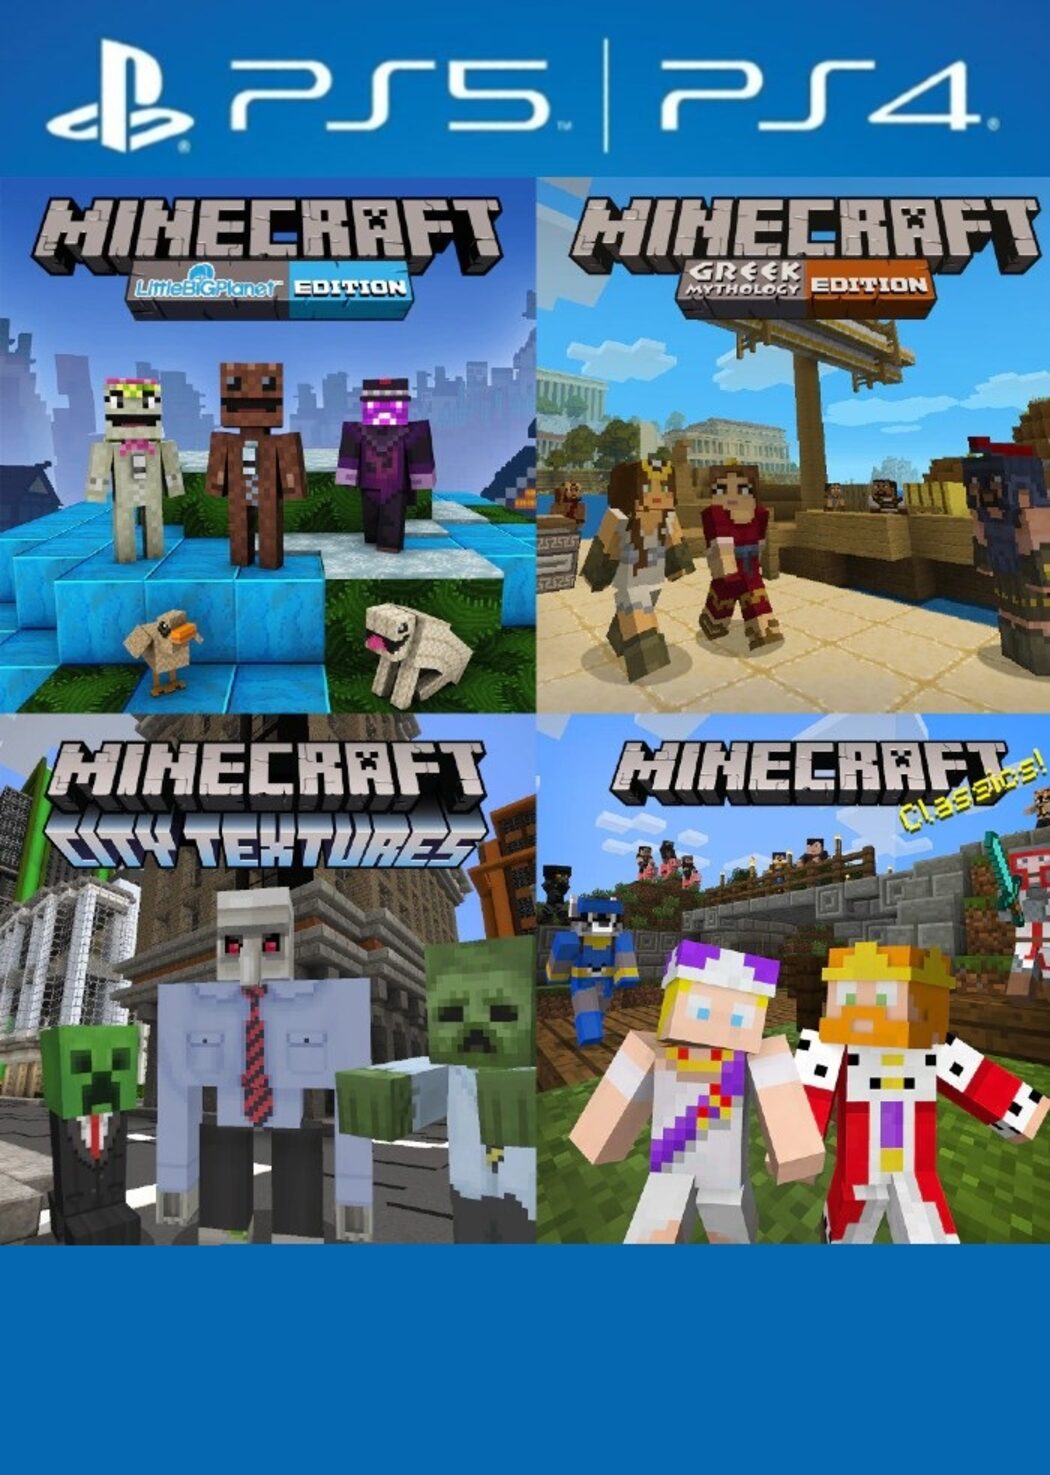 Minecraft Starter Collection Upgrade DLC PS4/PS5 PSN